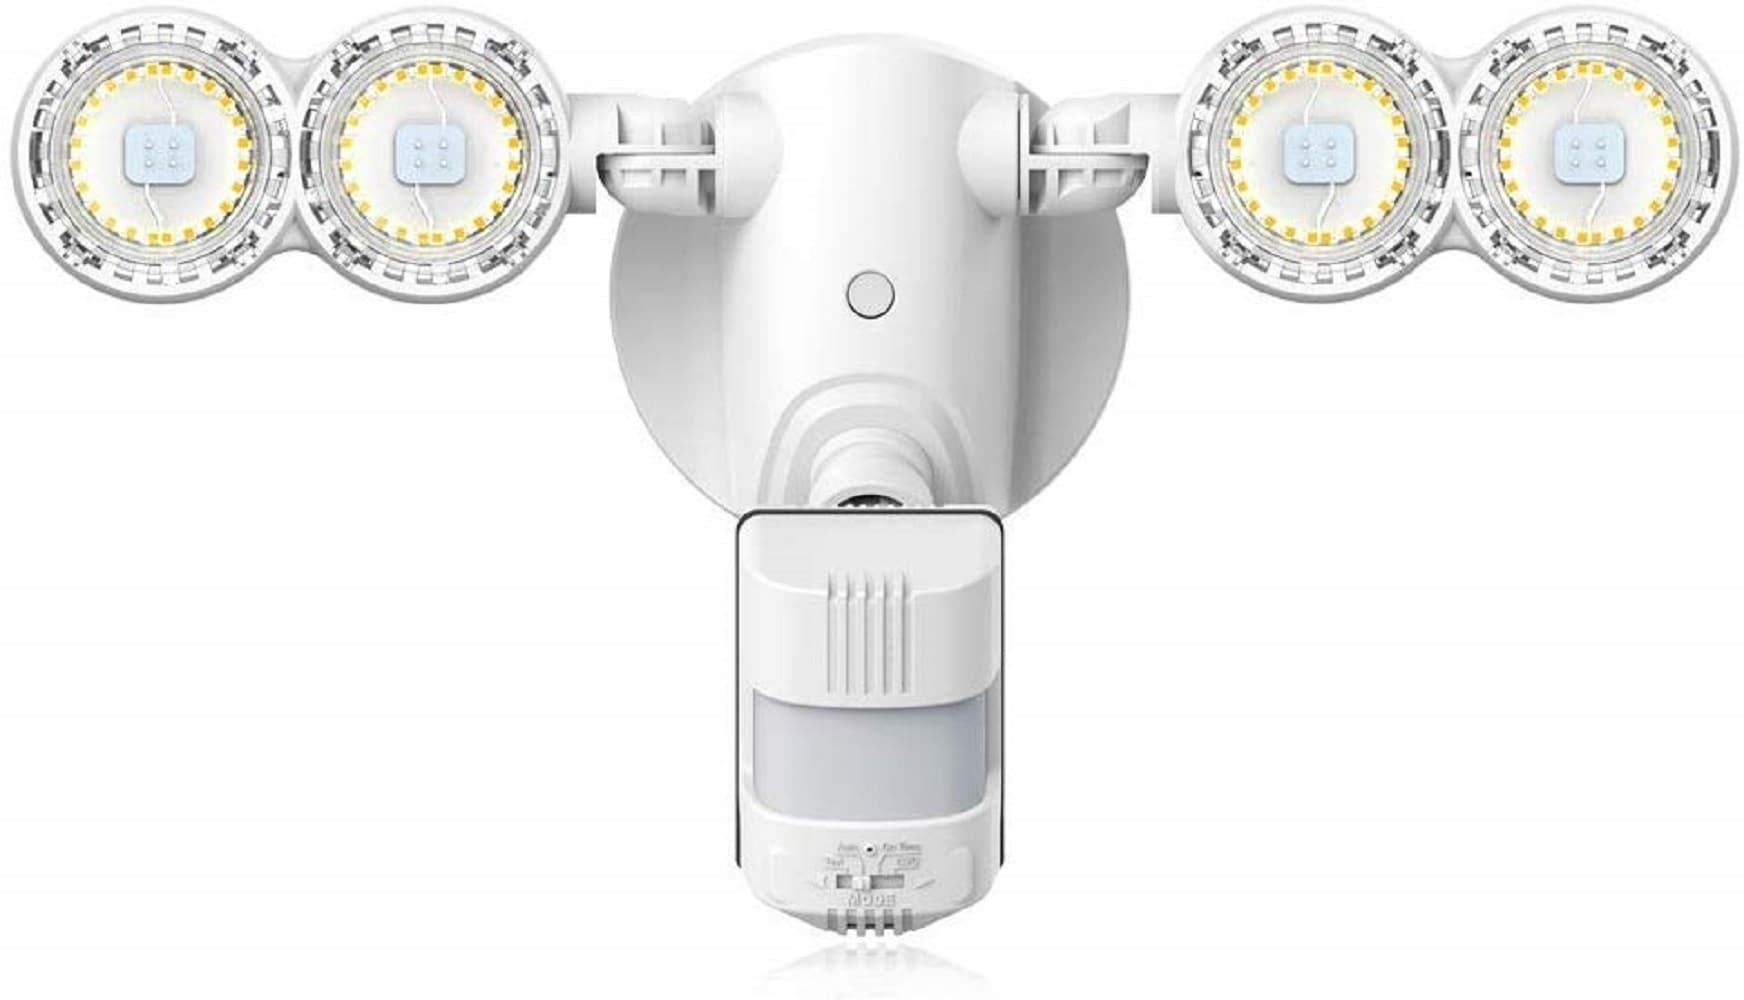 SANSI Outdoor LED Security Light Motion Sensor Detector 36W=500W Floodlight Lamp 